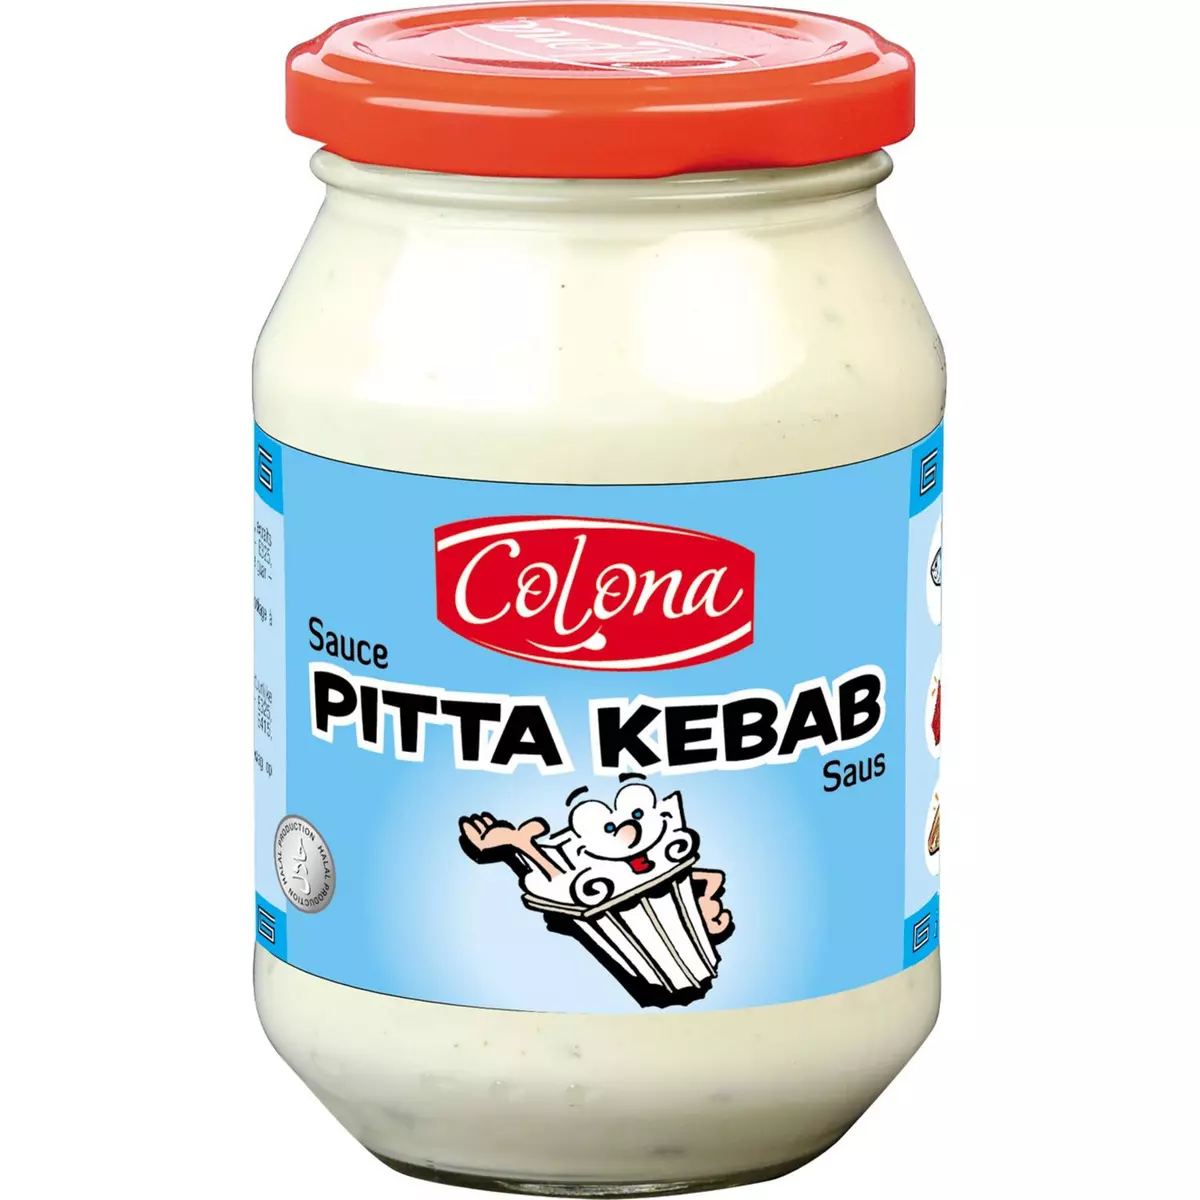 COLONA Sauce pitta kebab 235g